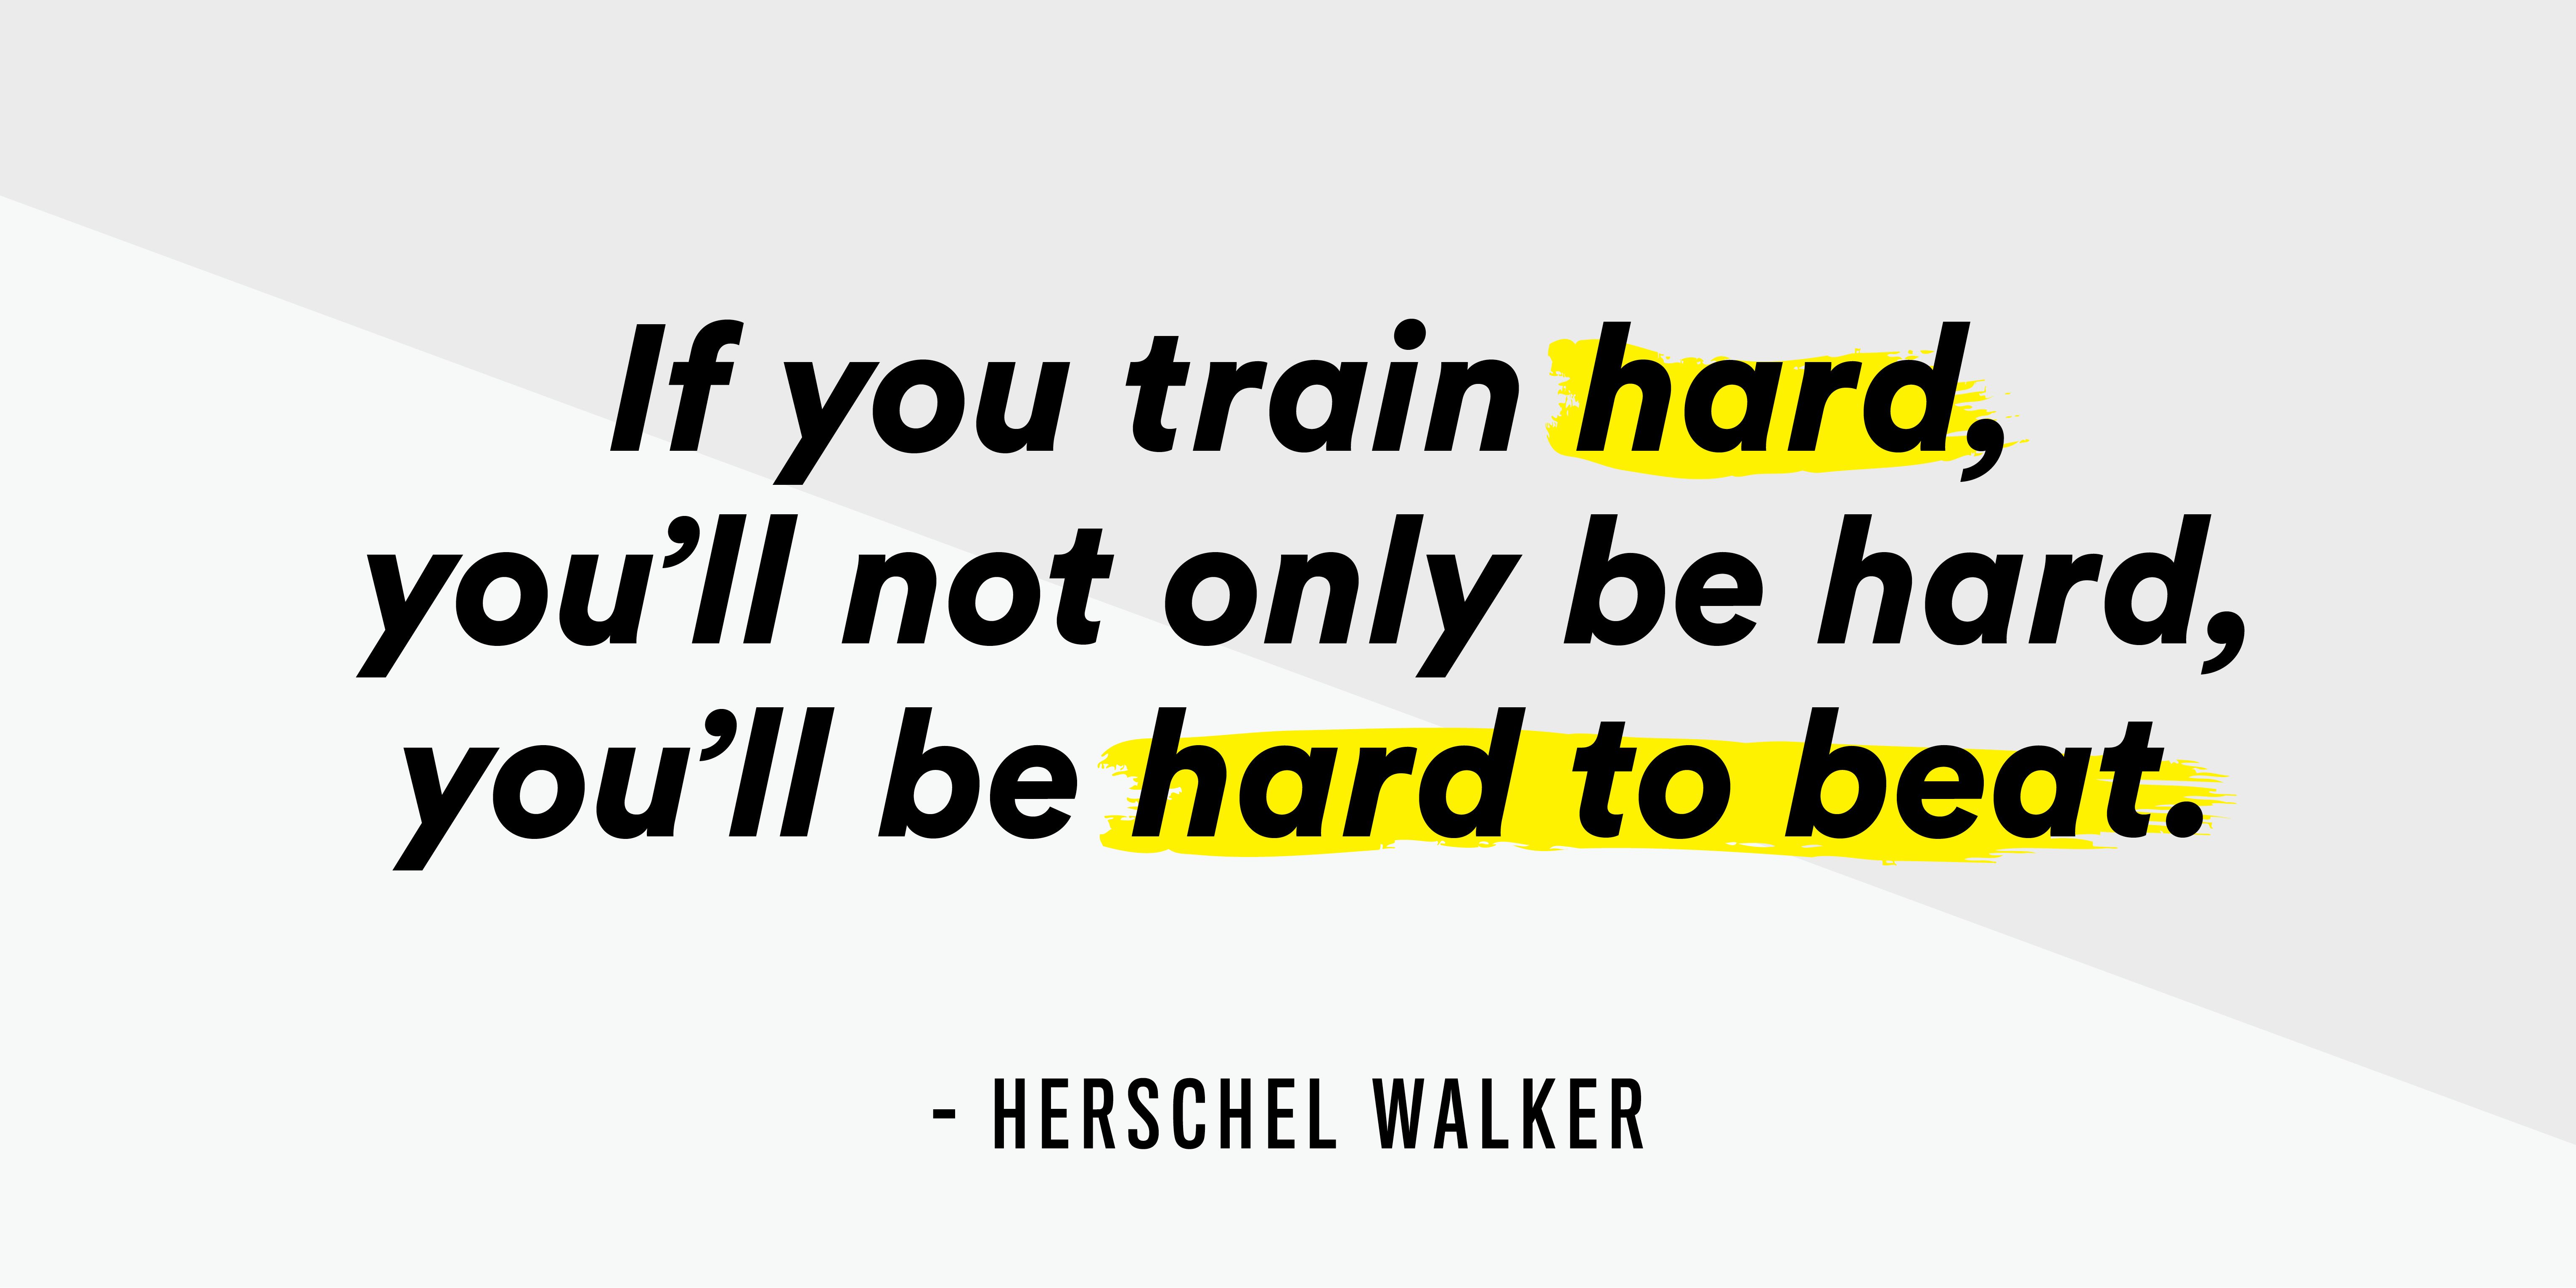 running motivational quotes for men